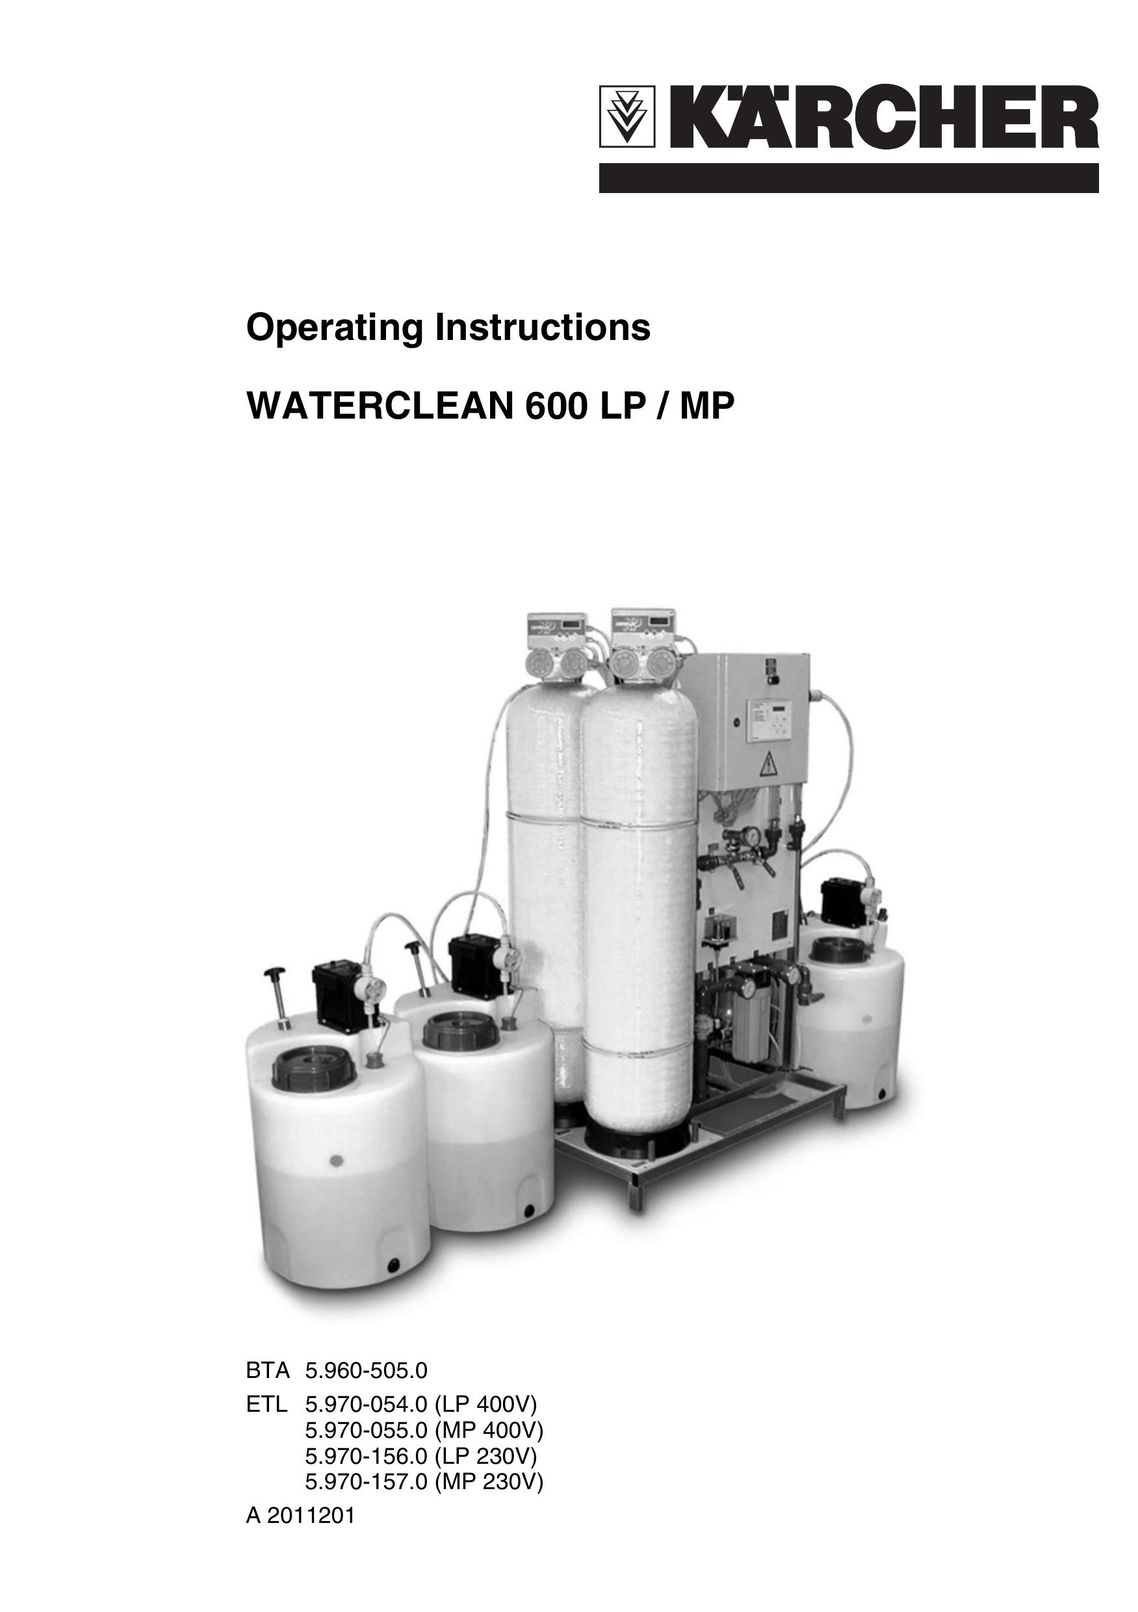 Karcher 600 LP Water System User Manual